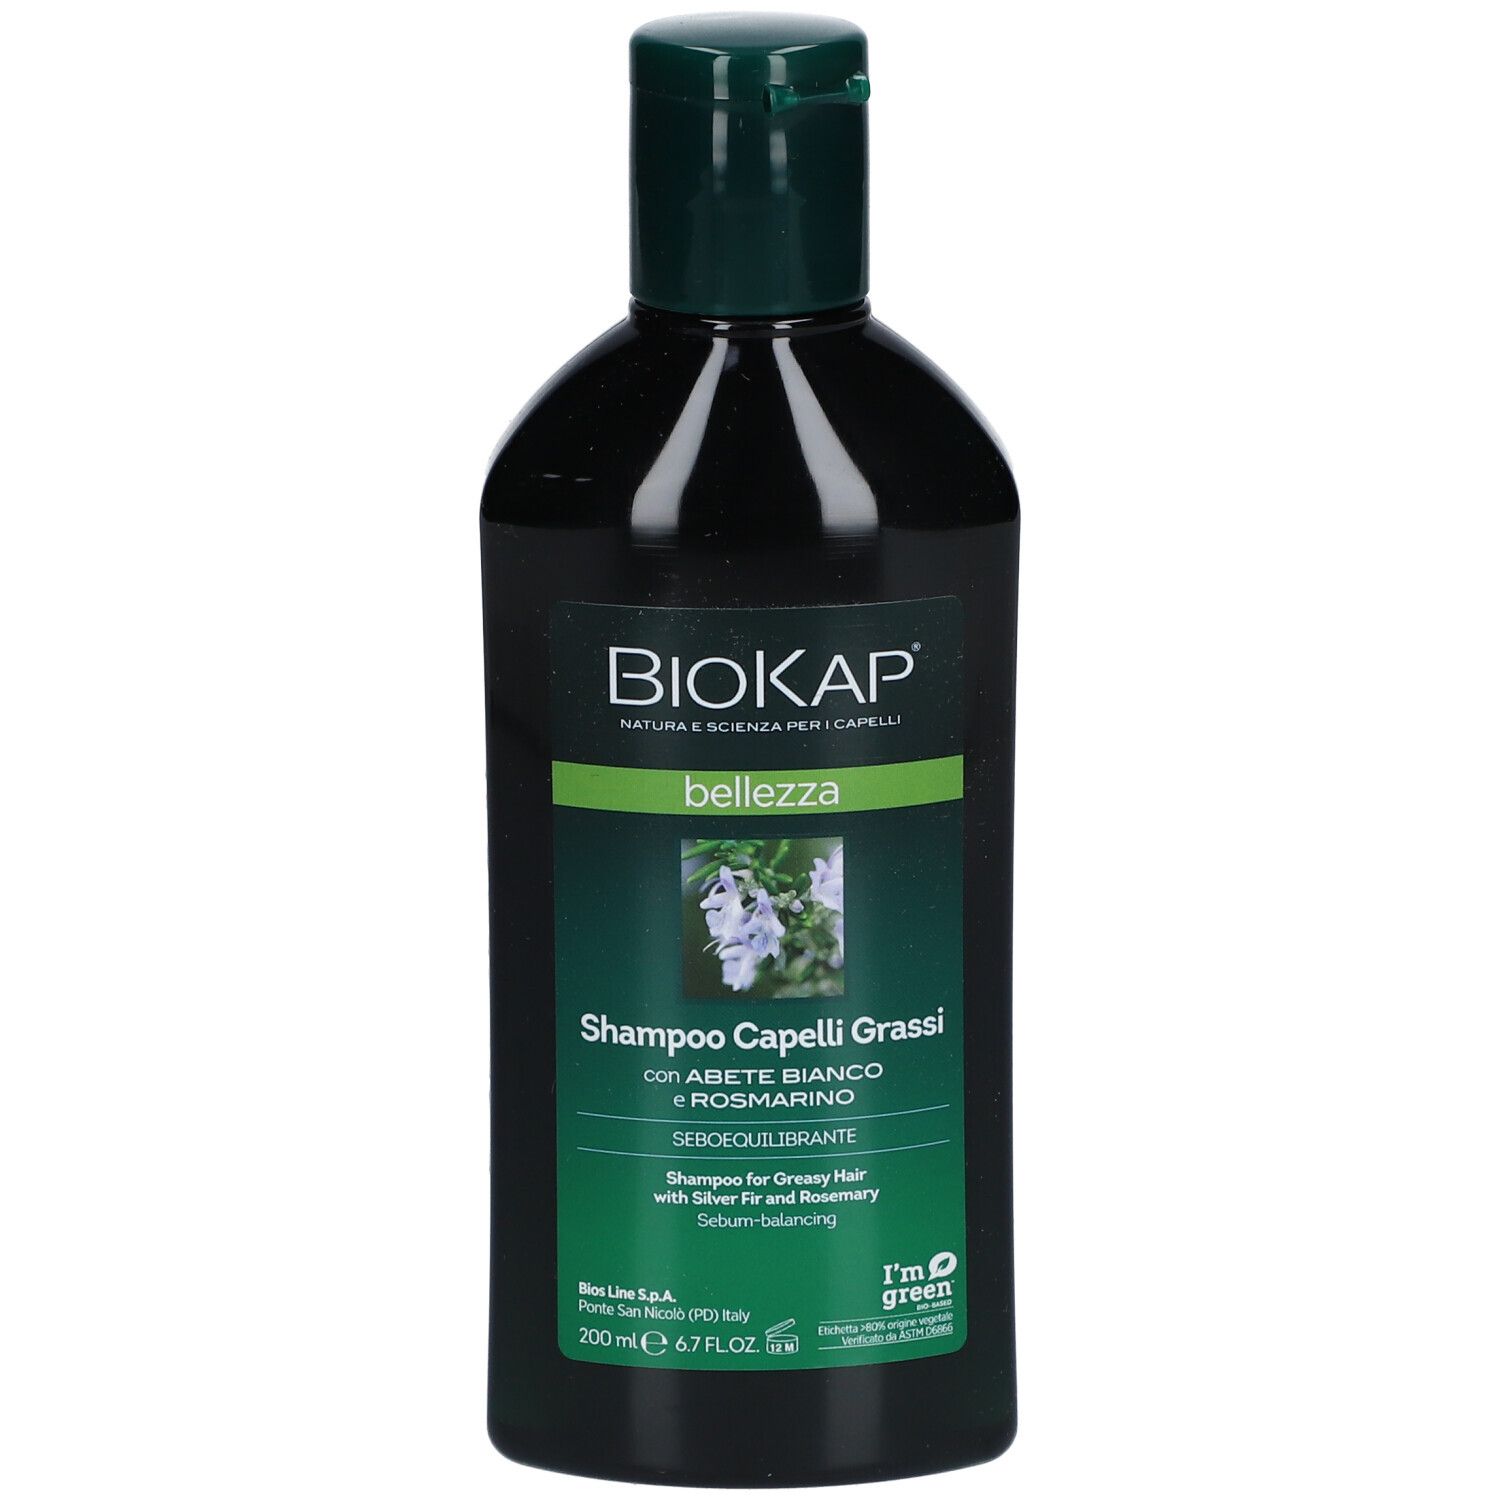 BioKap® Shampoo Sibertanne & Rosmarin